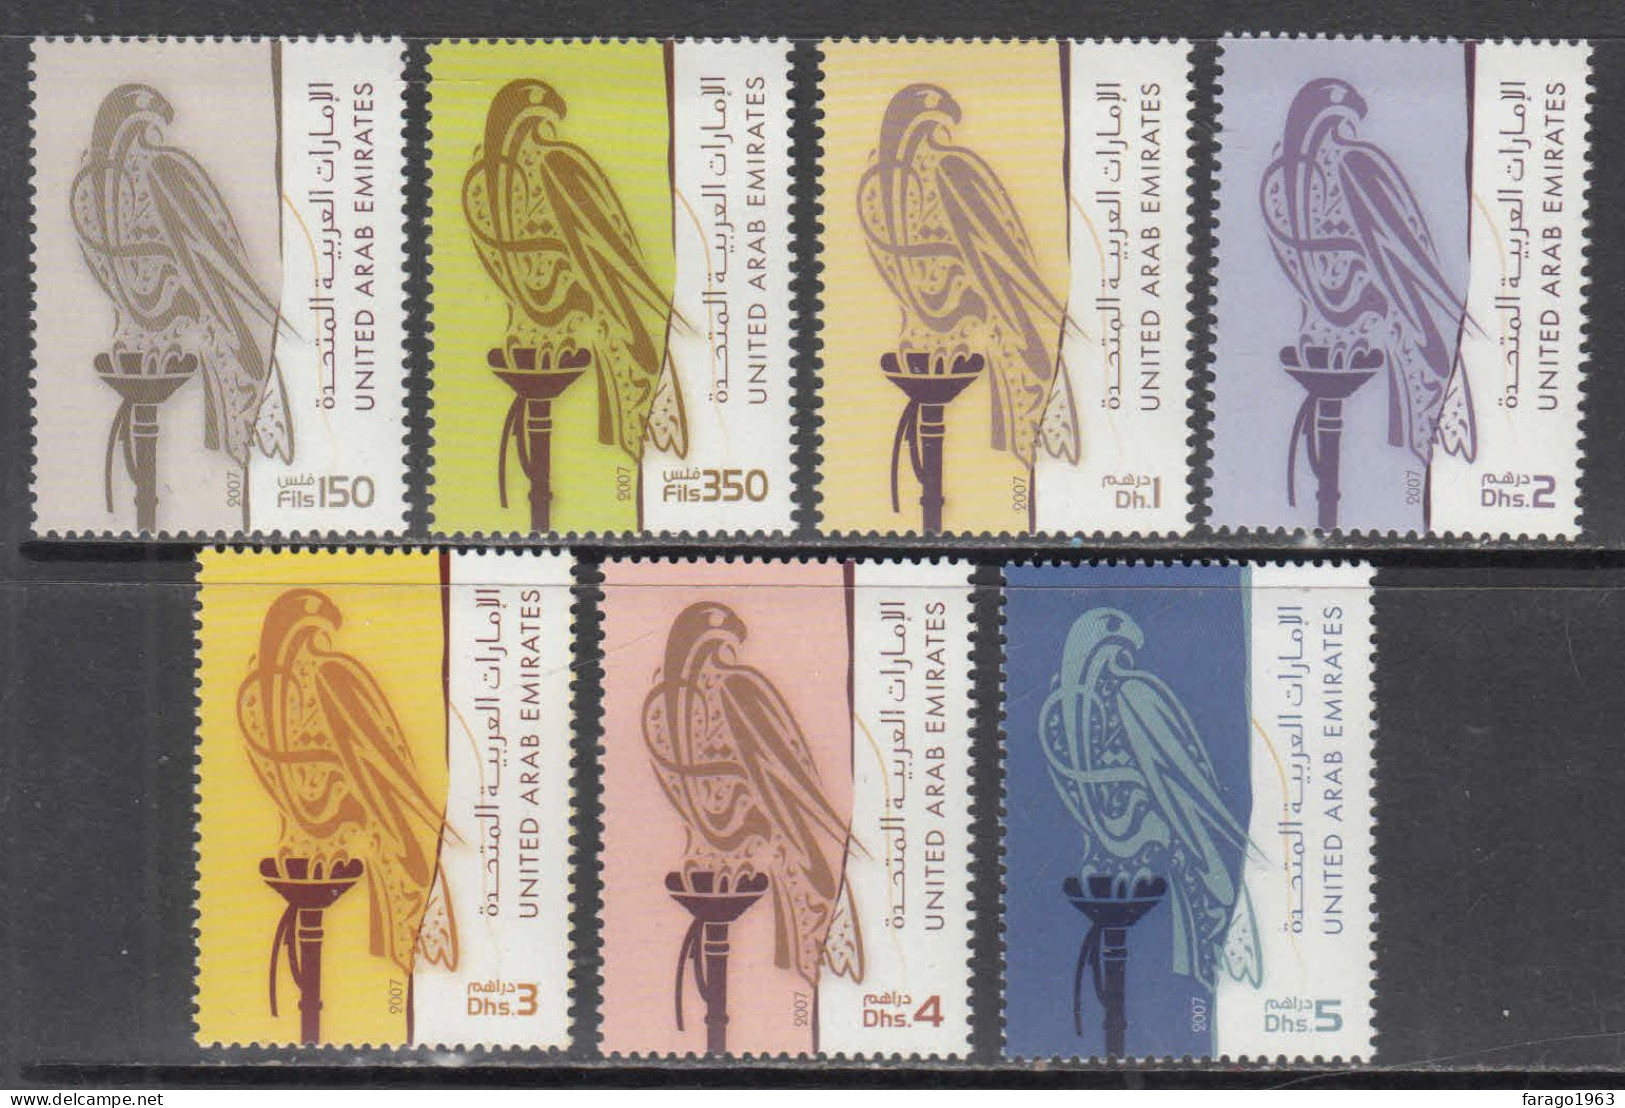 2007 United Arab Emirates Falcon Birds Definitive Complete Set Of 7 MNH - Ver. Arab. Emirate